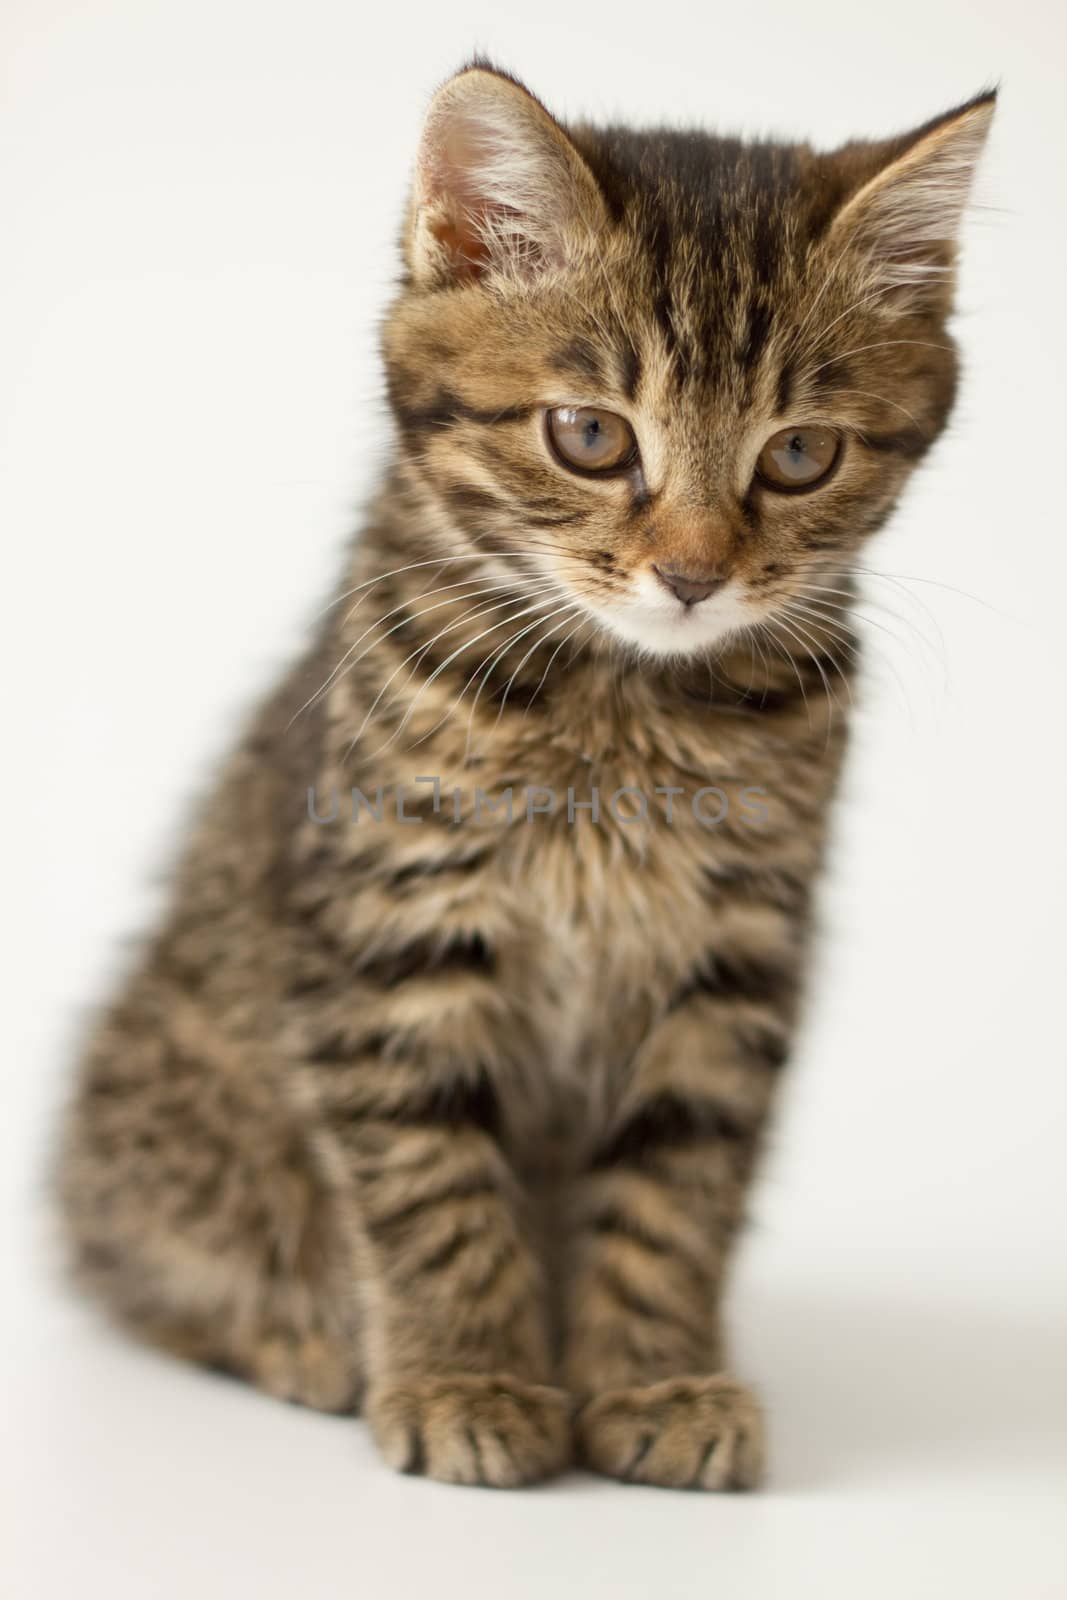 Kuril bobtail kitten by Nika__